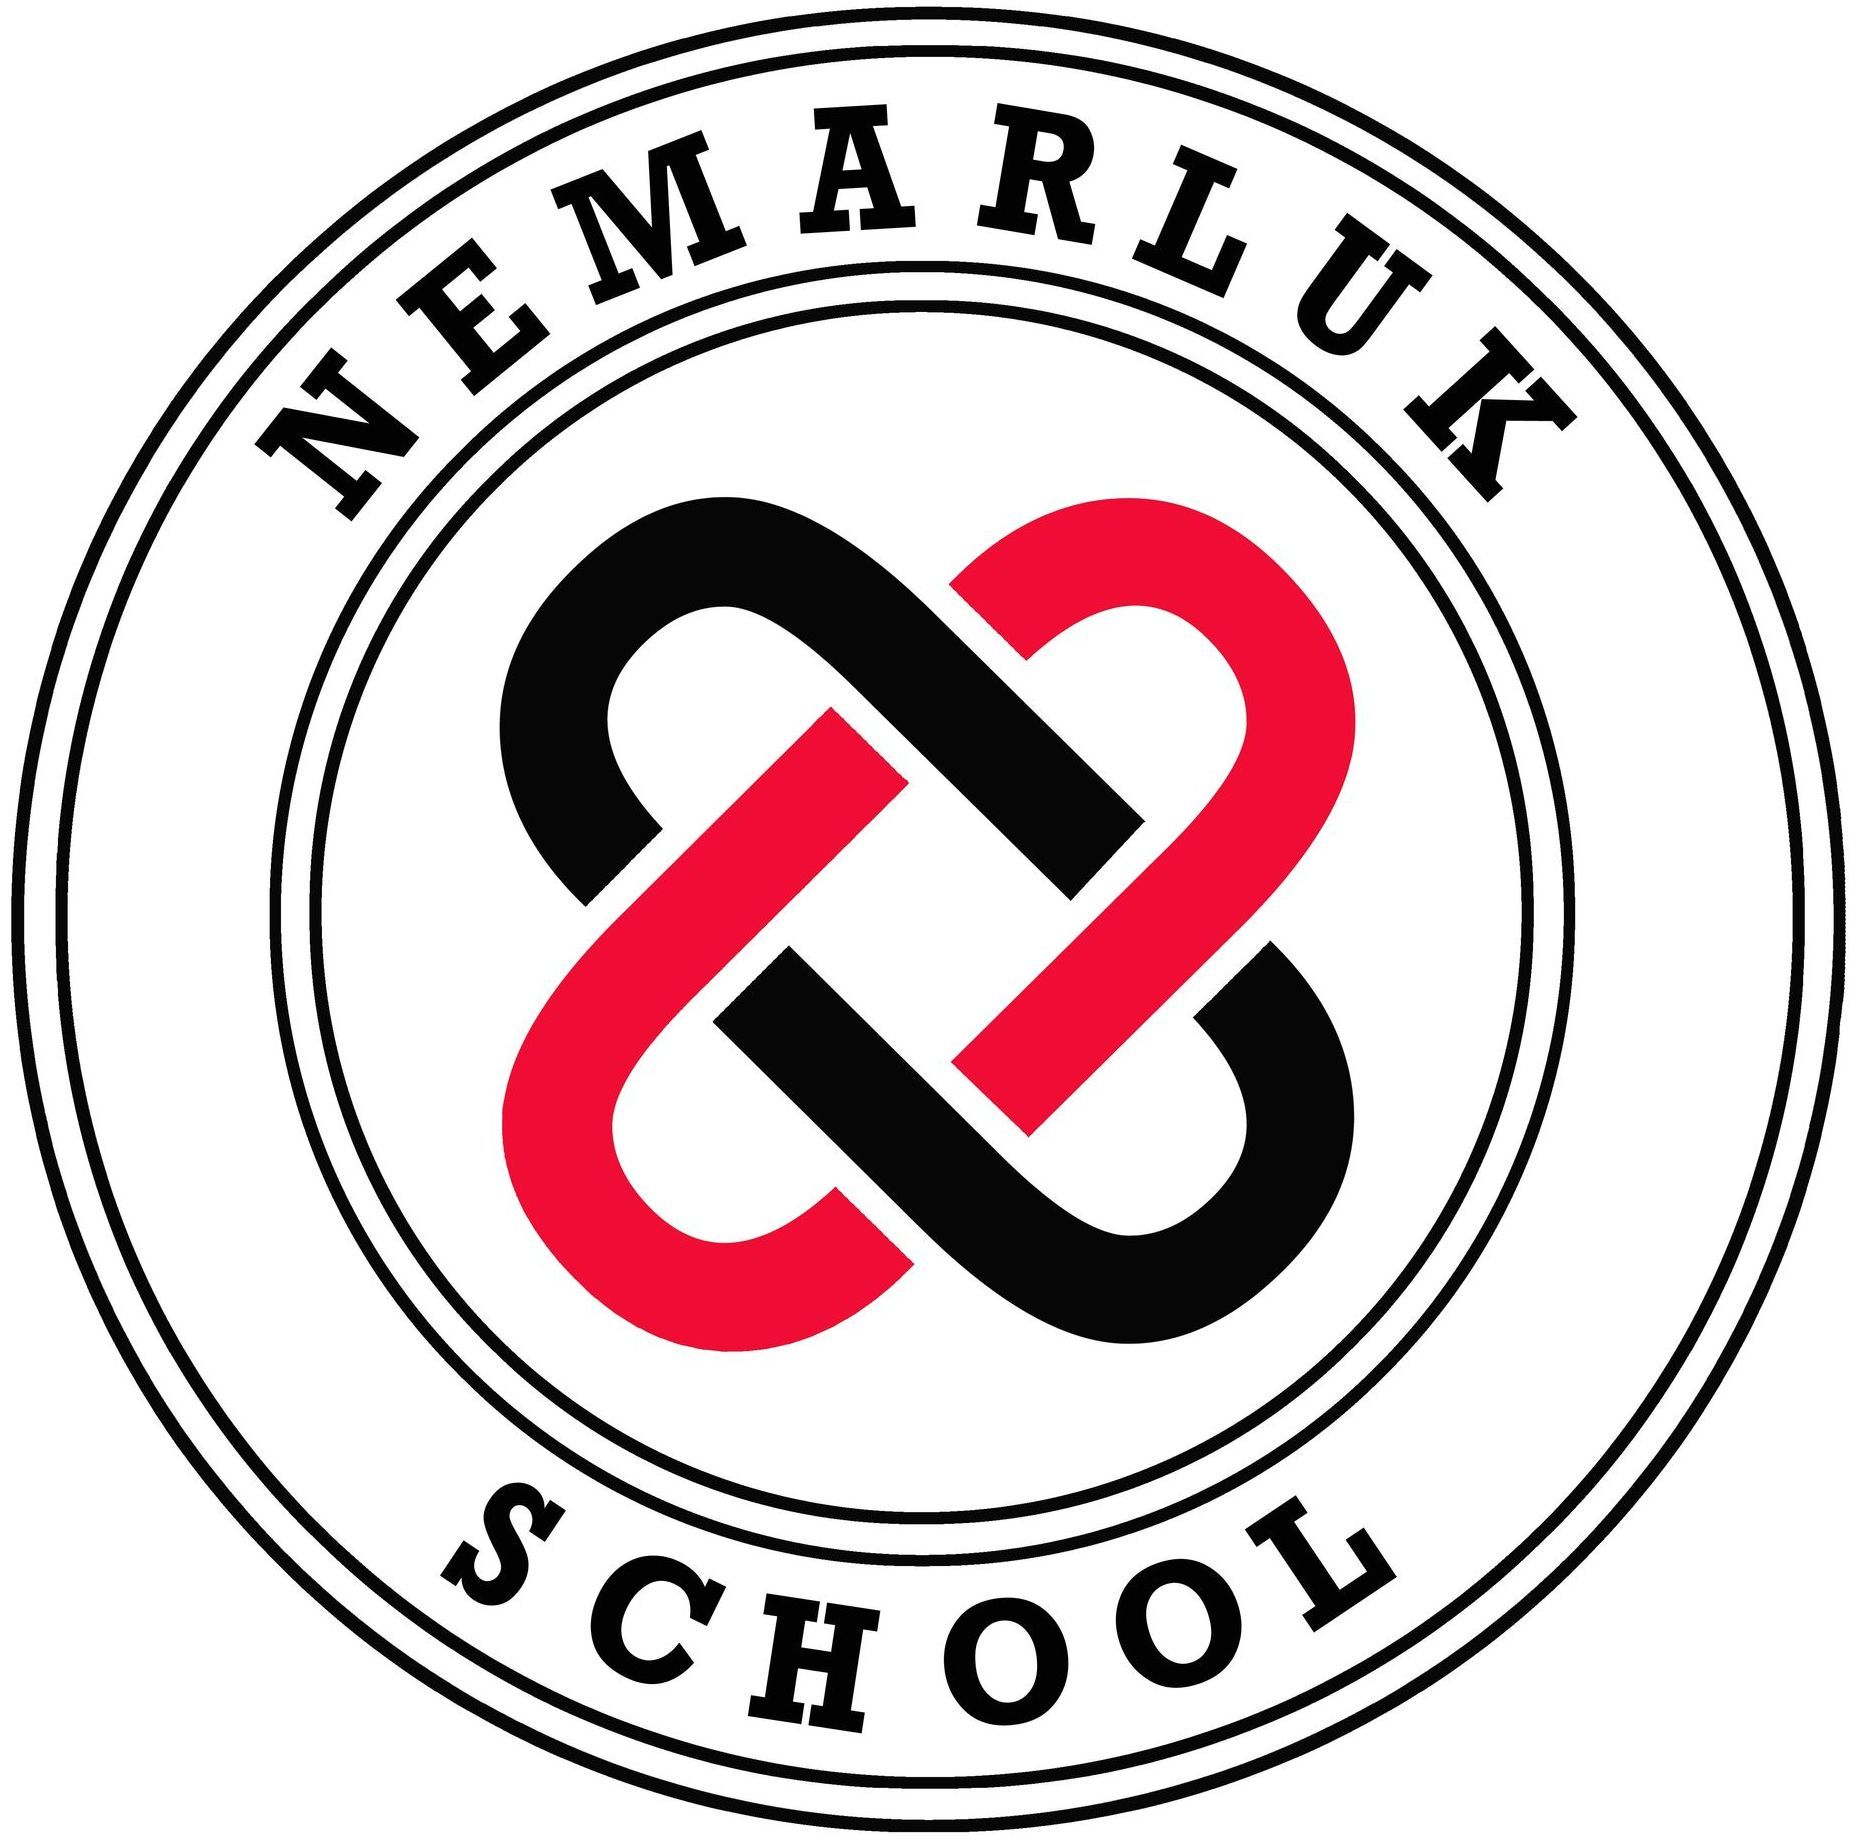 A black and red logo for nemarluk school